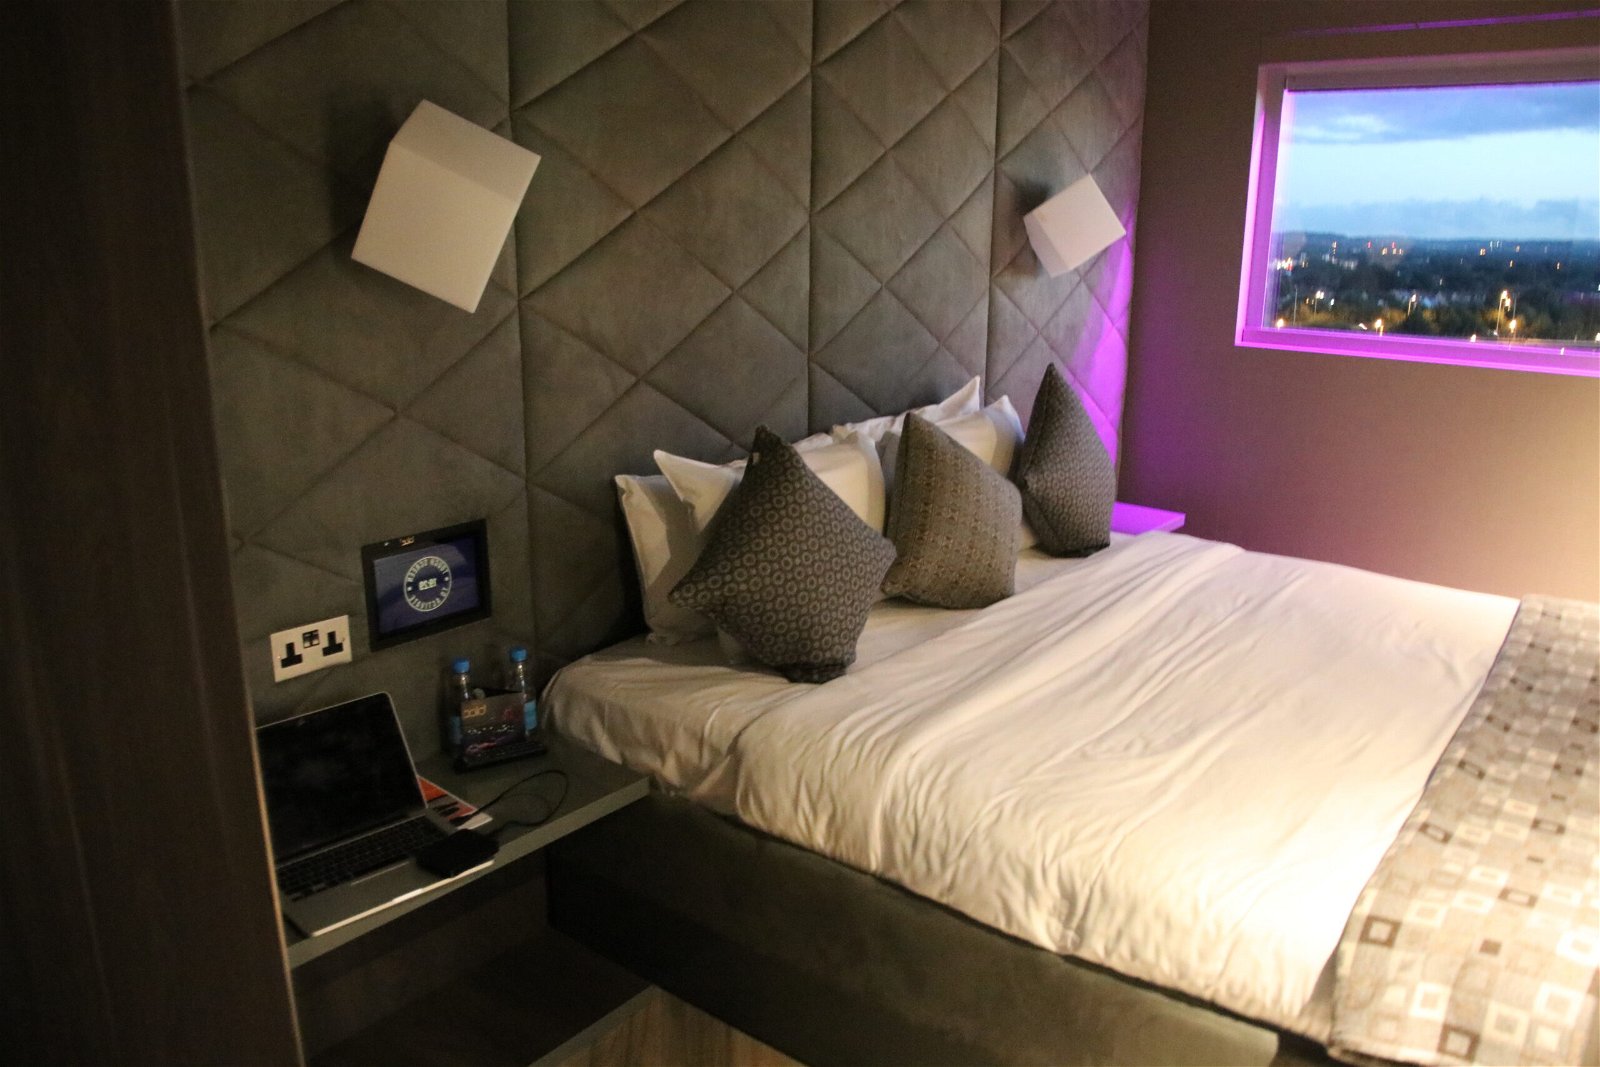 Bloc Hotel Bedroom at night 2